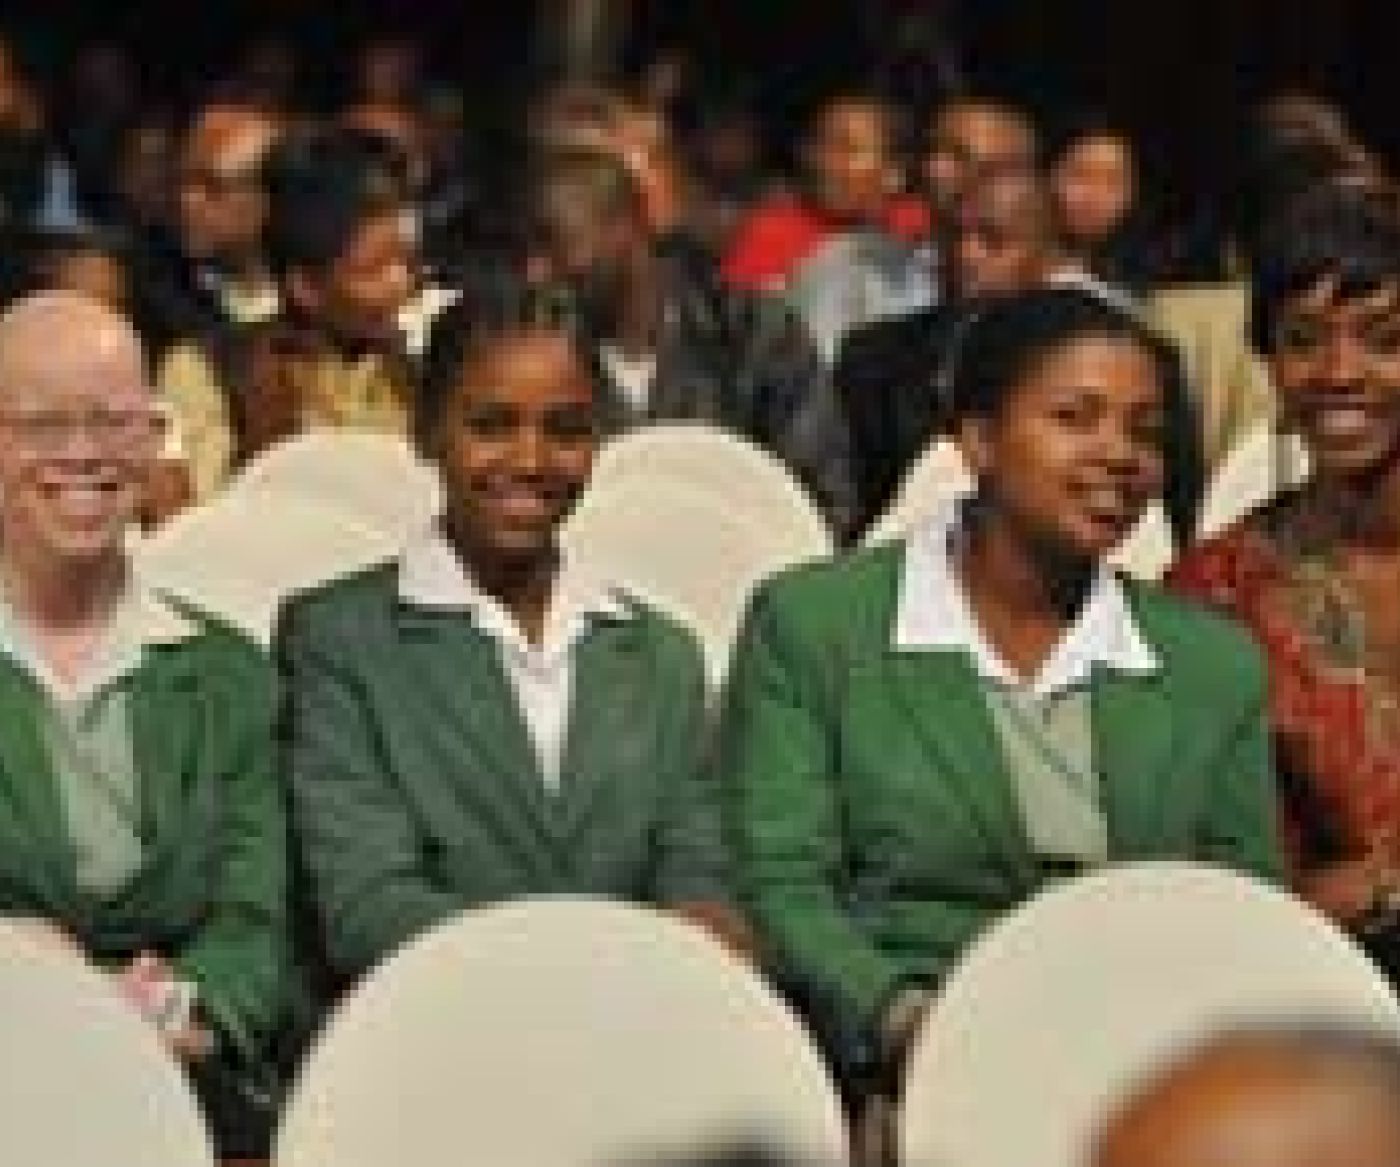 Scholars attending the Oprah Winfrey Leadership Academy for Girls